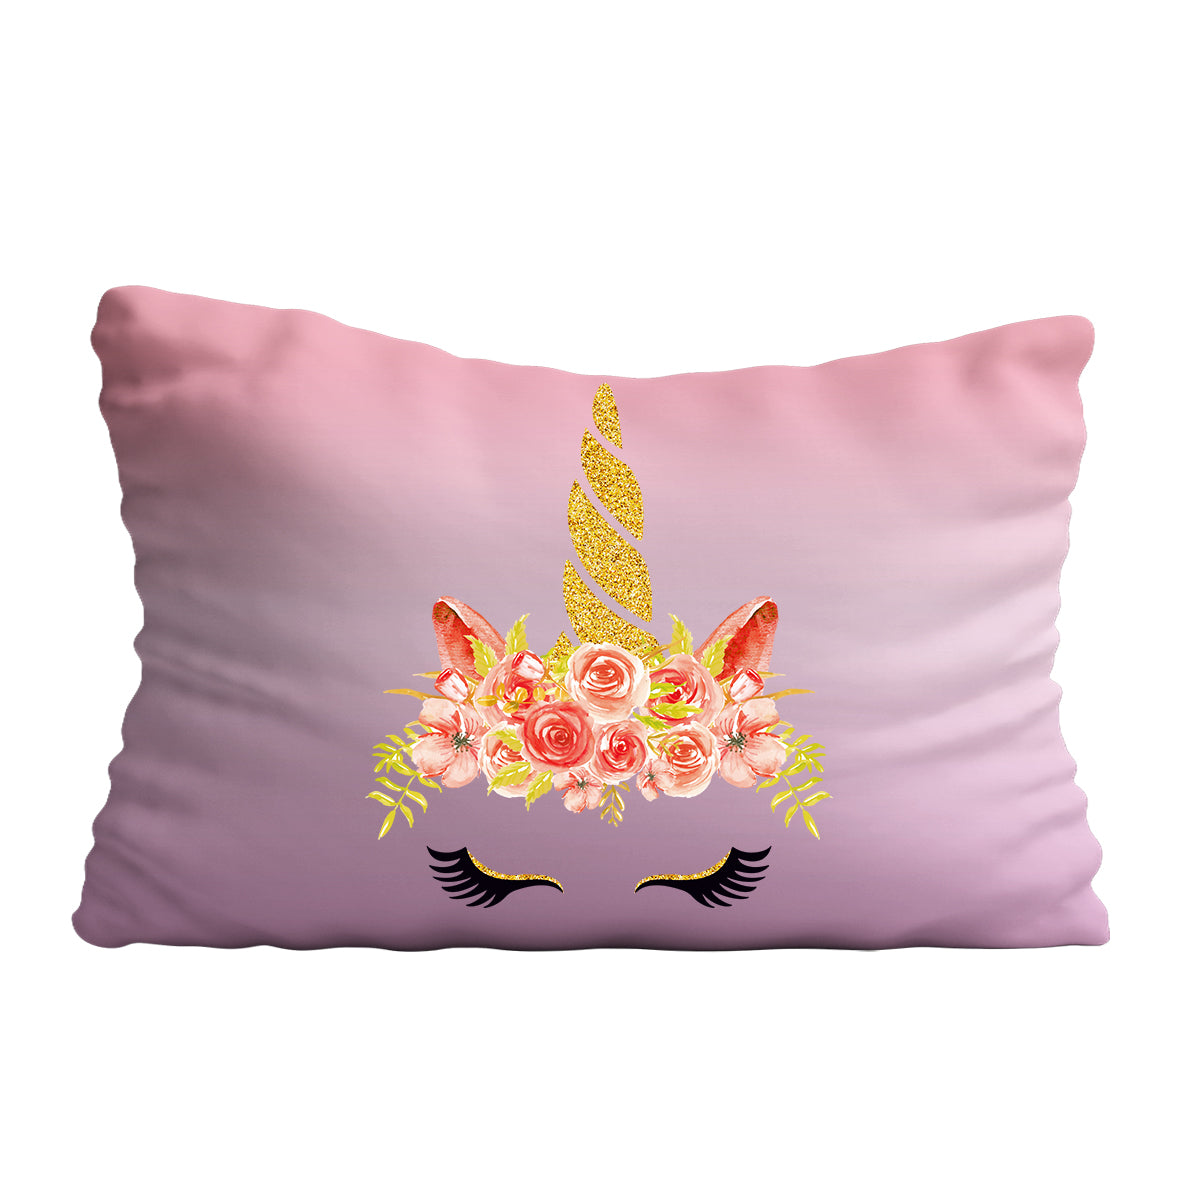 Unicorn Pink Degrade Pillow Case 20 x 27""